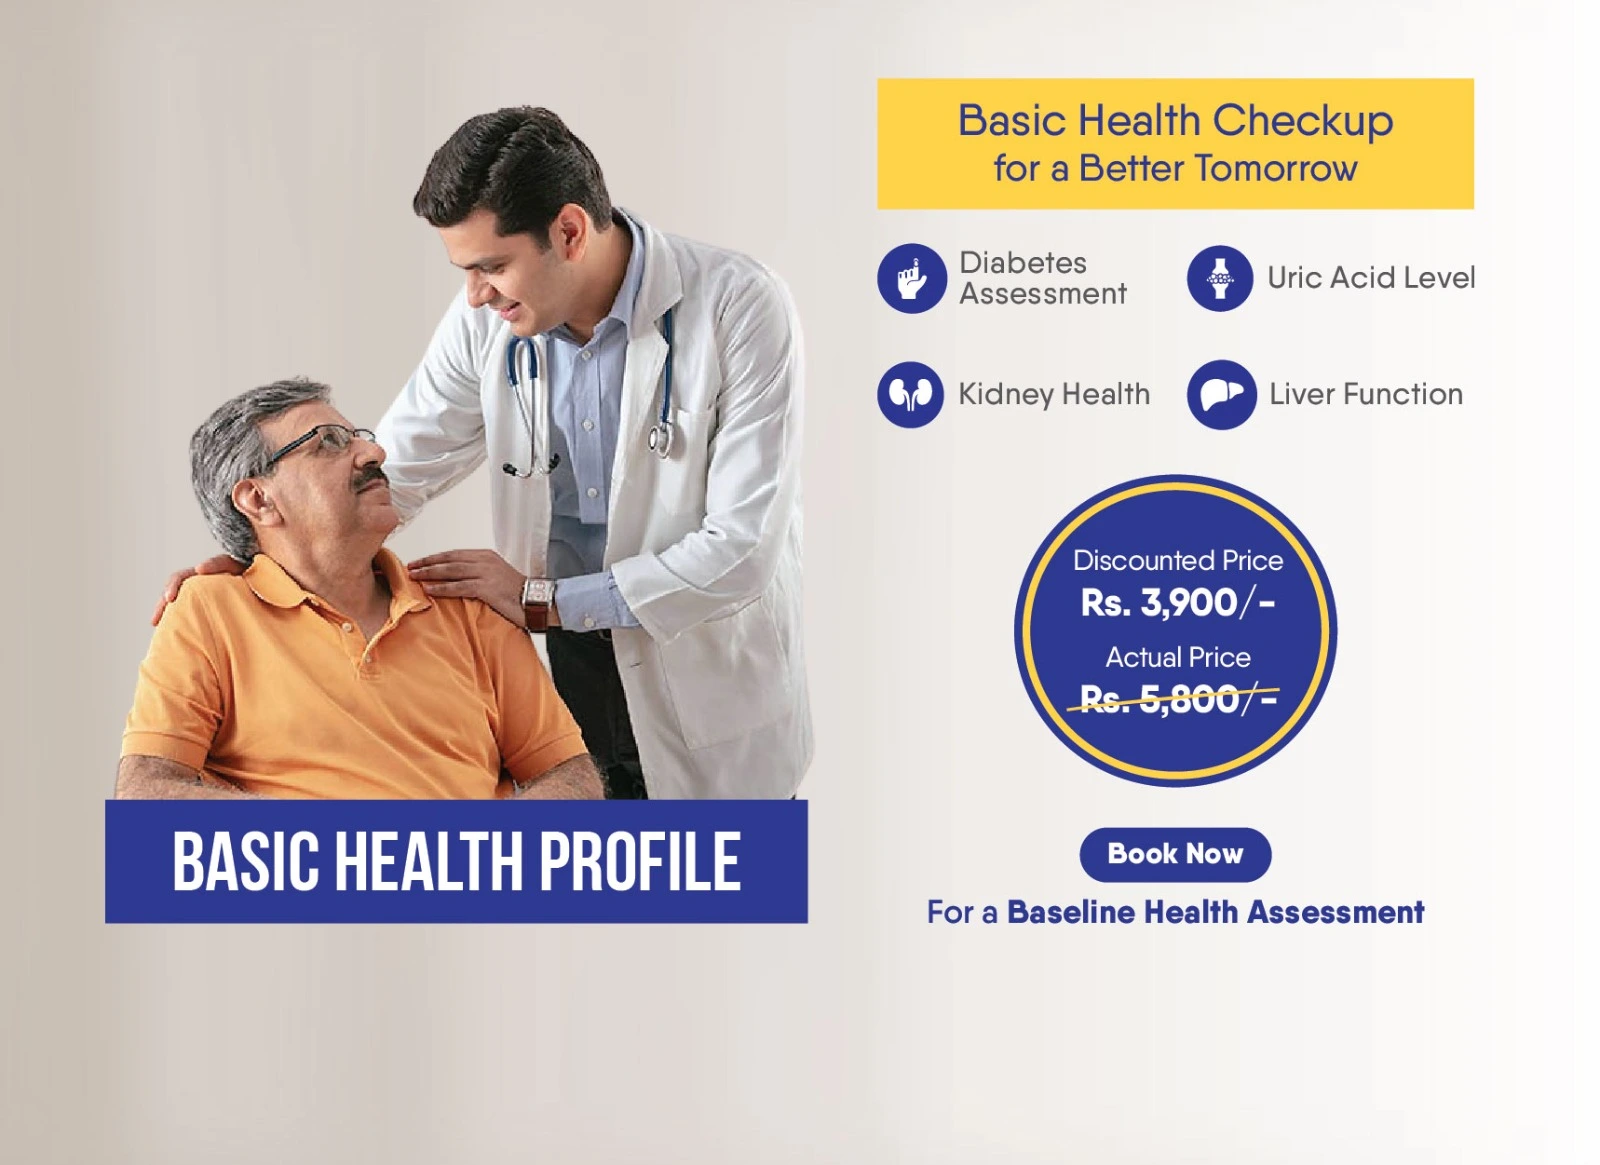 Basic Health Profile